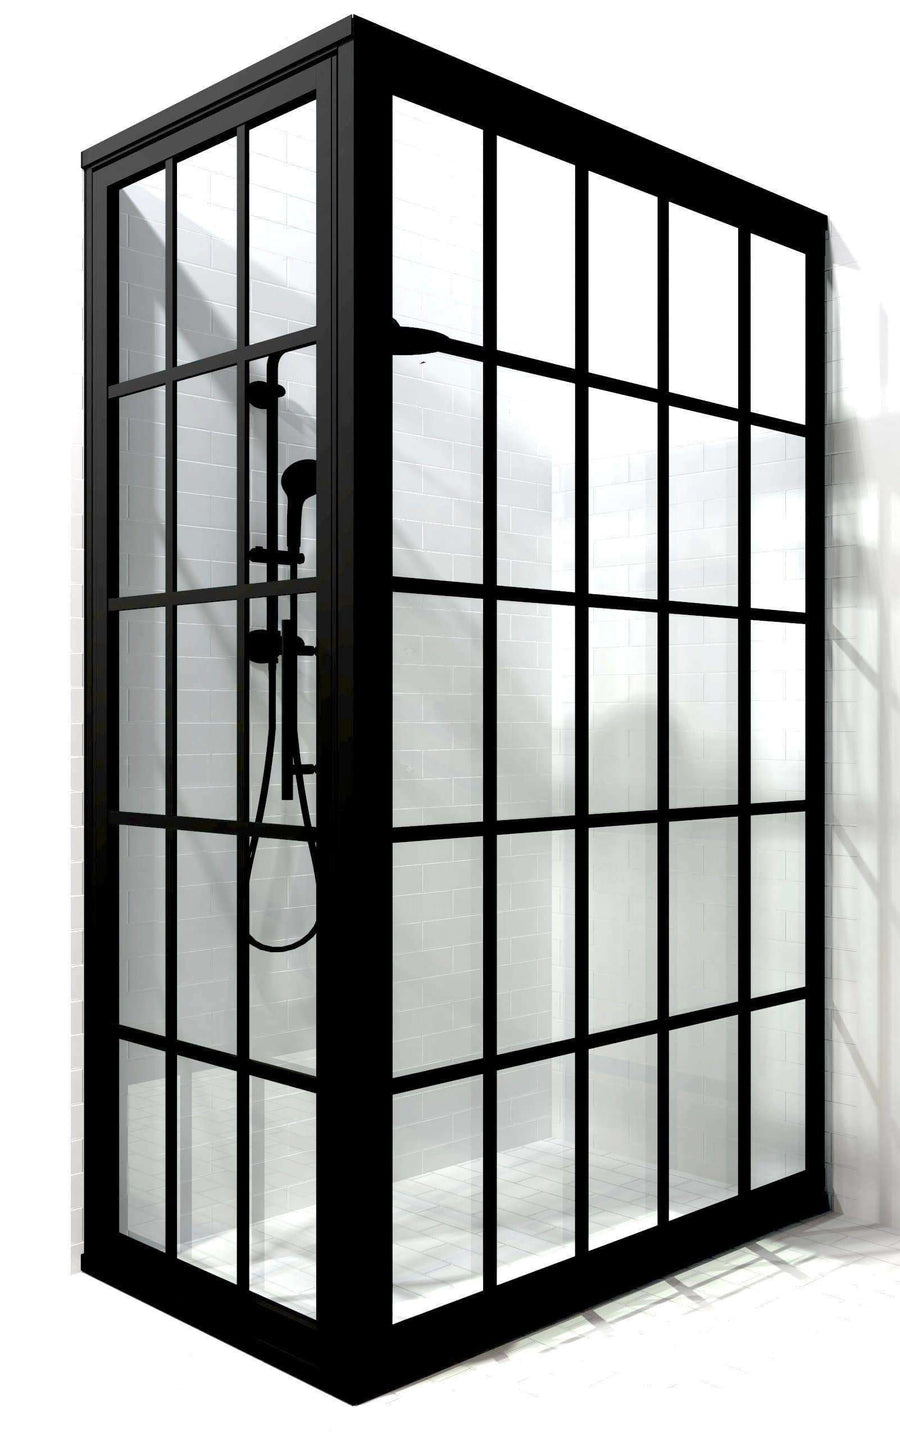 Gridscape 36 in x 60 in black framed hinged corner shower enclosure by Coastal Shower Doors